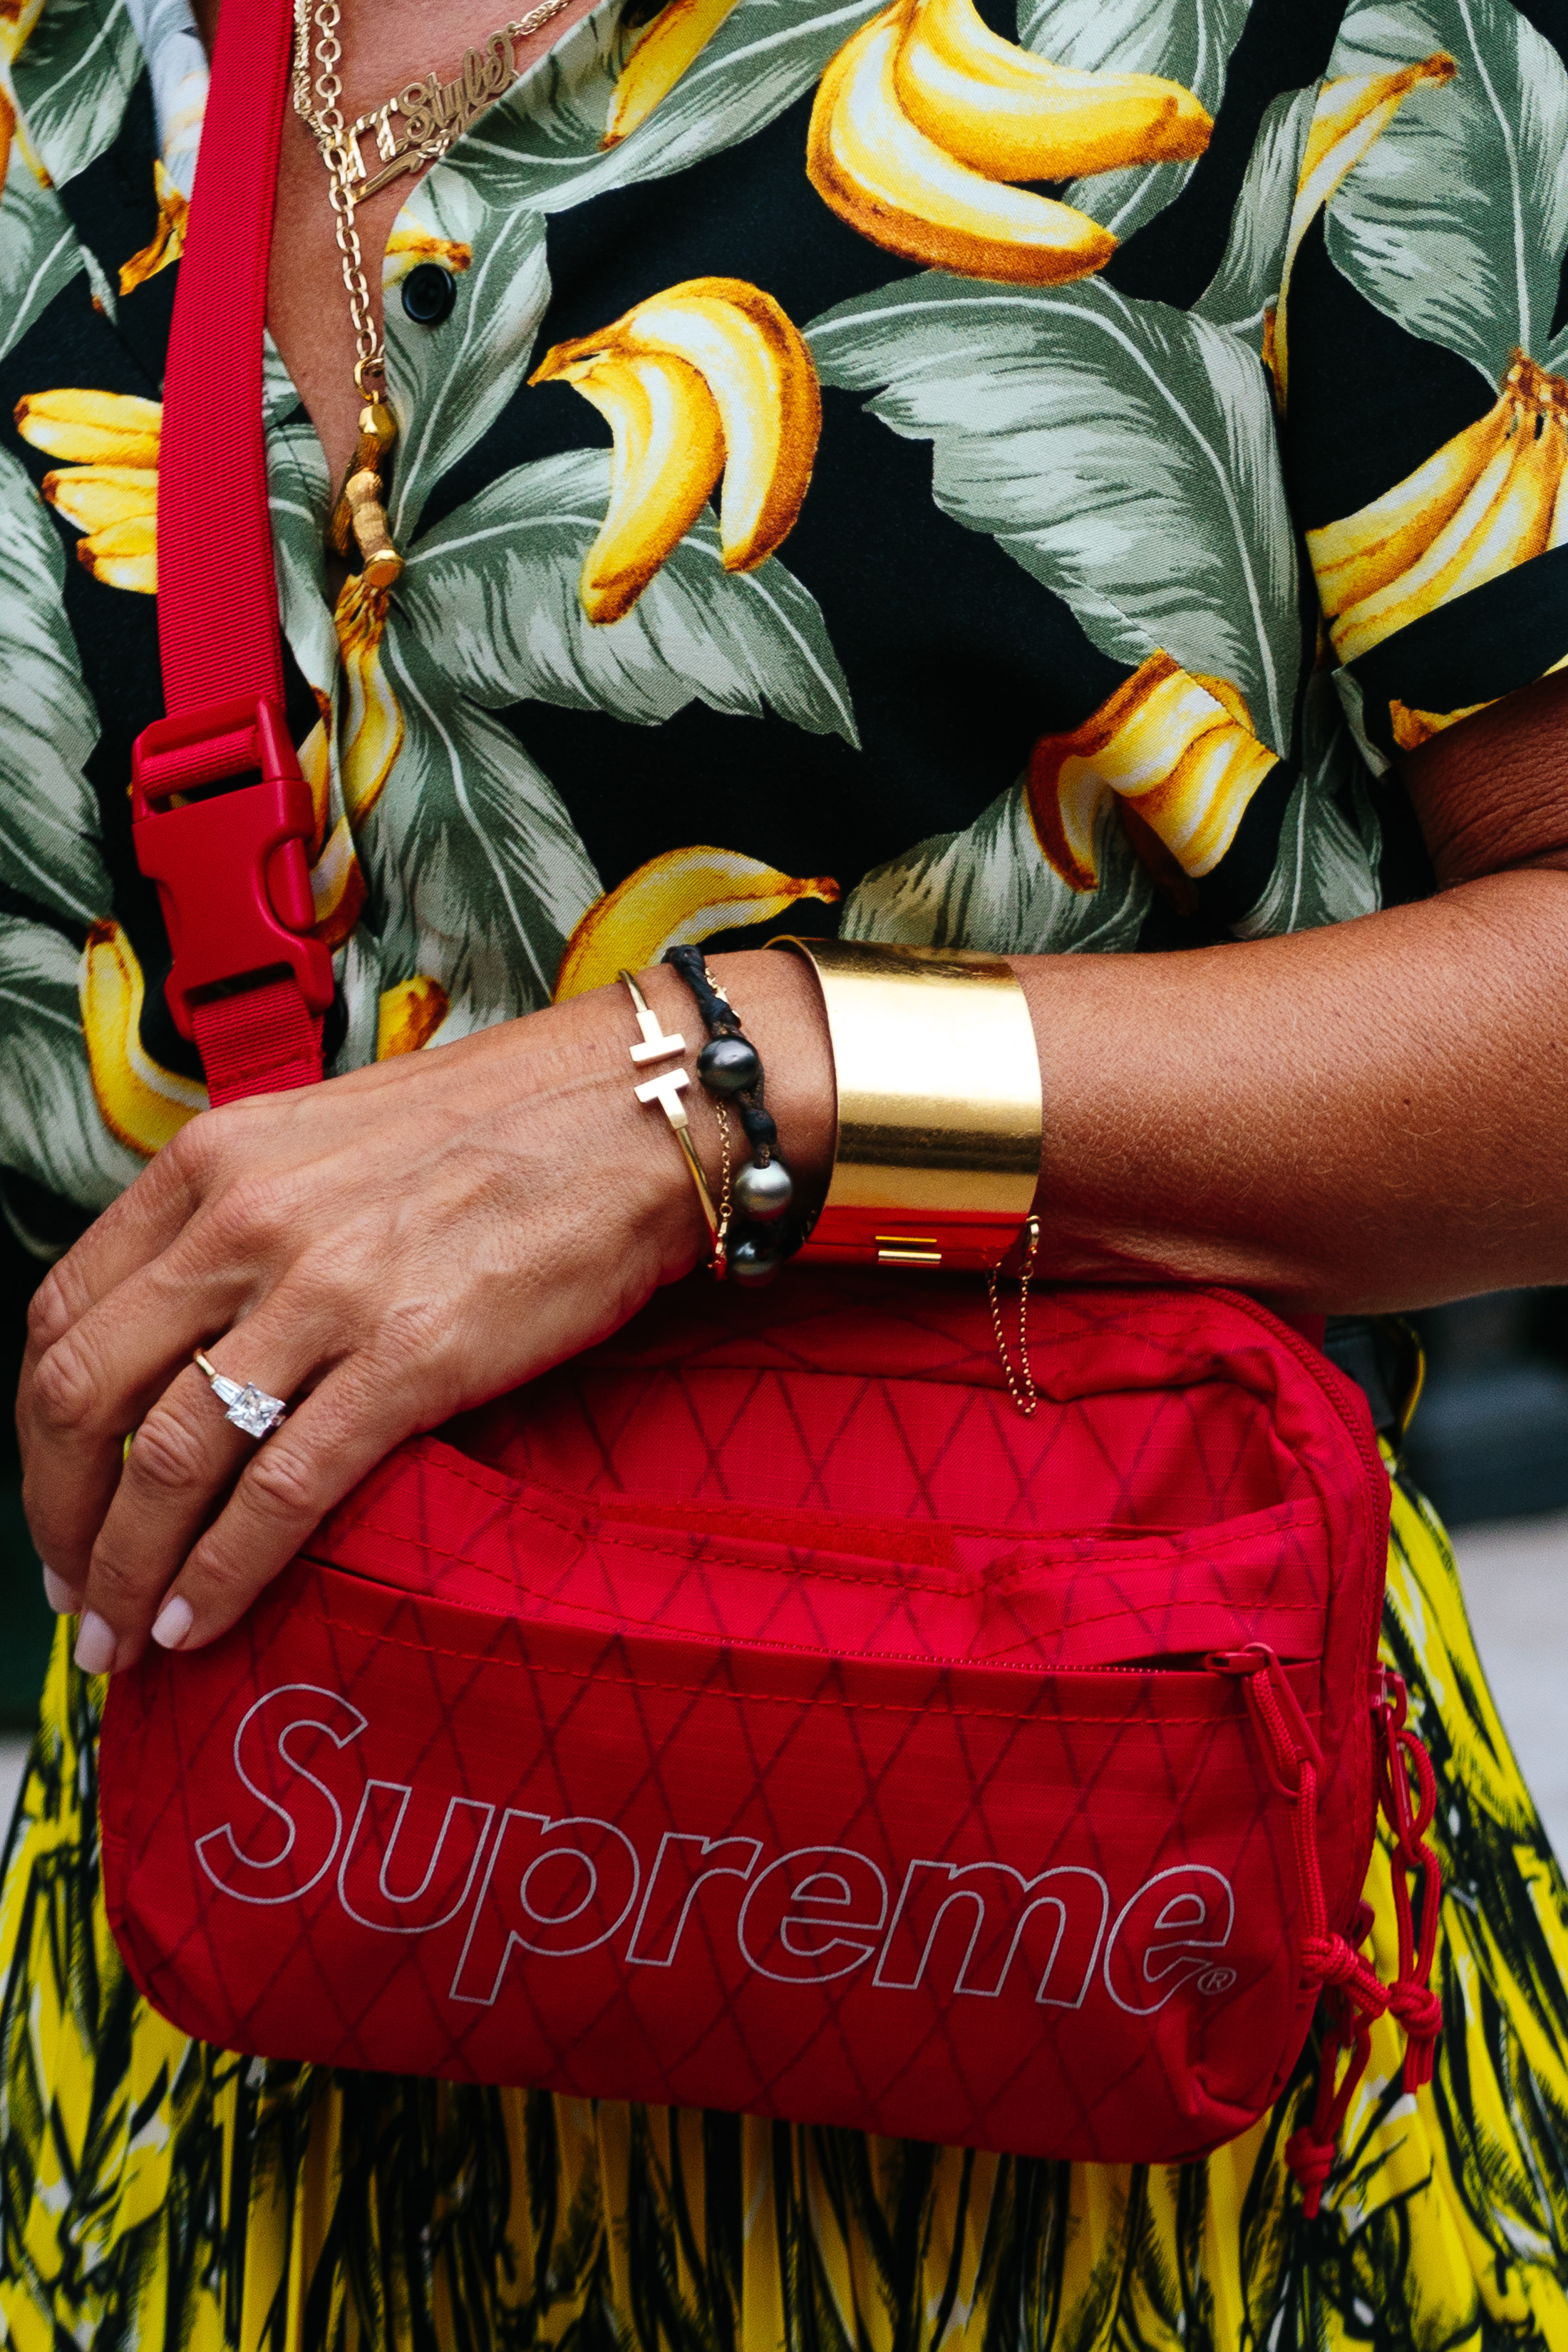 woman wearing Supreme bag in NYC